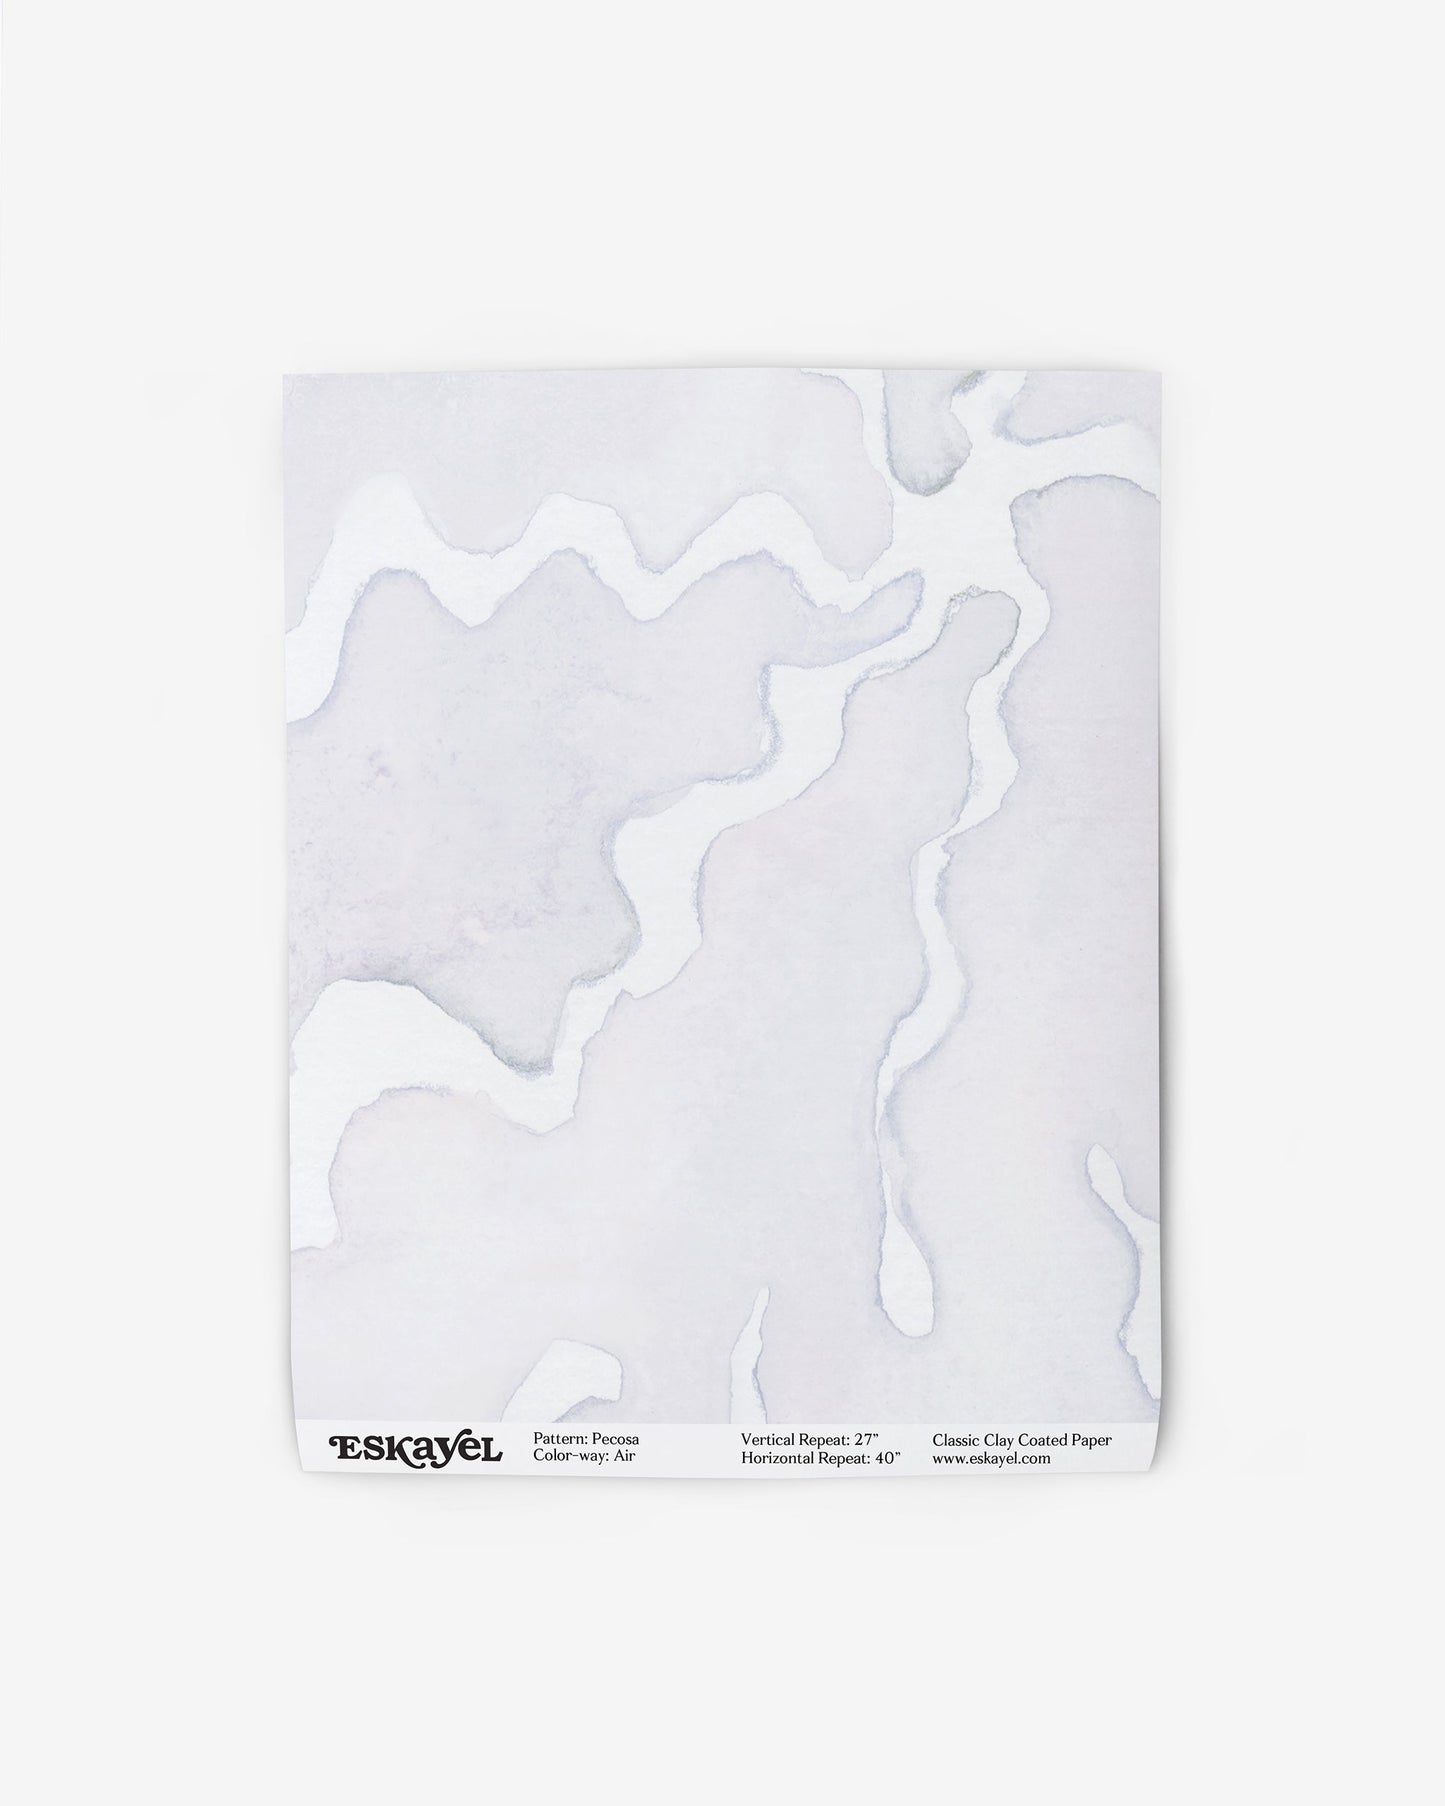 Pecosa Wallpaper Sample||Air